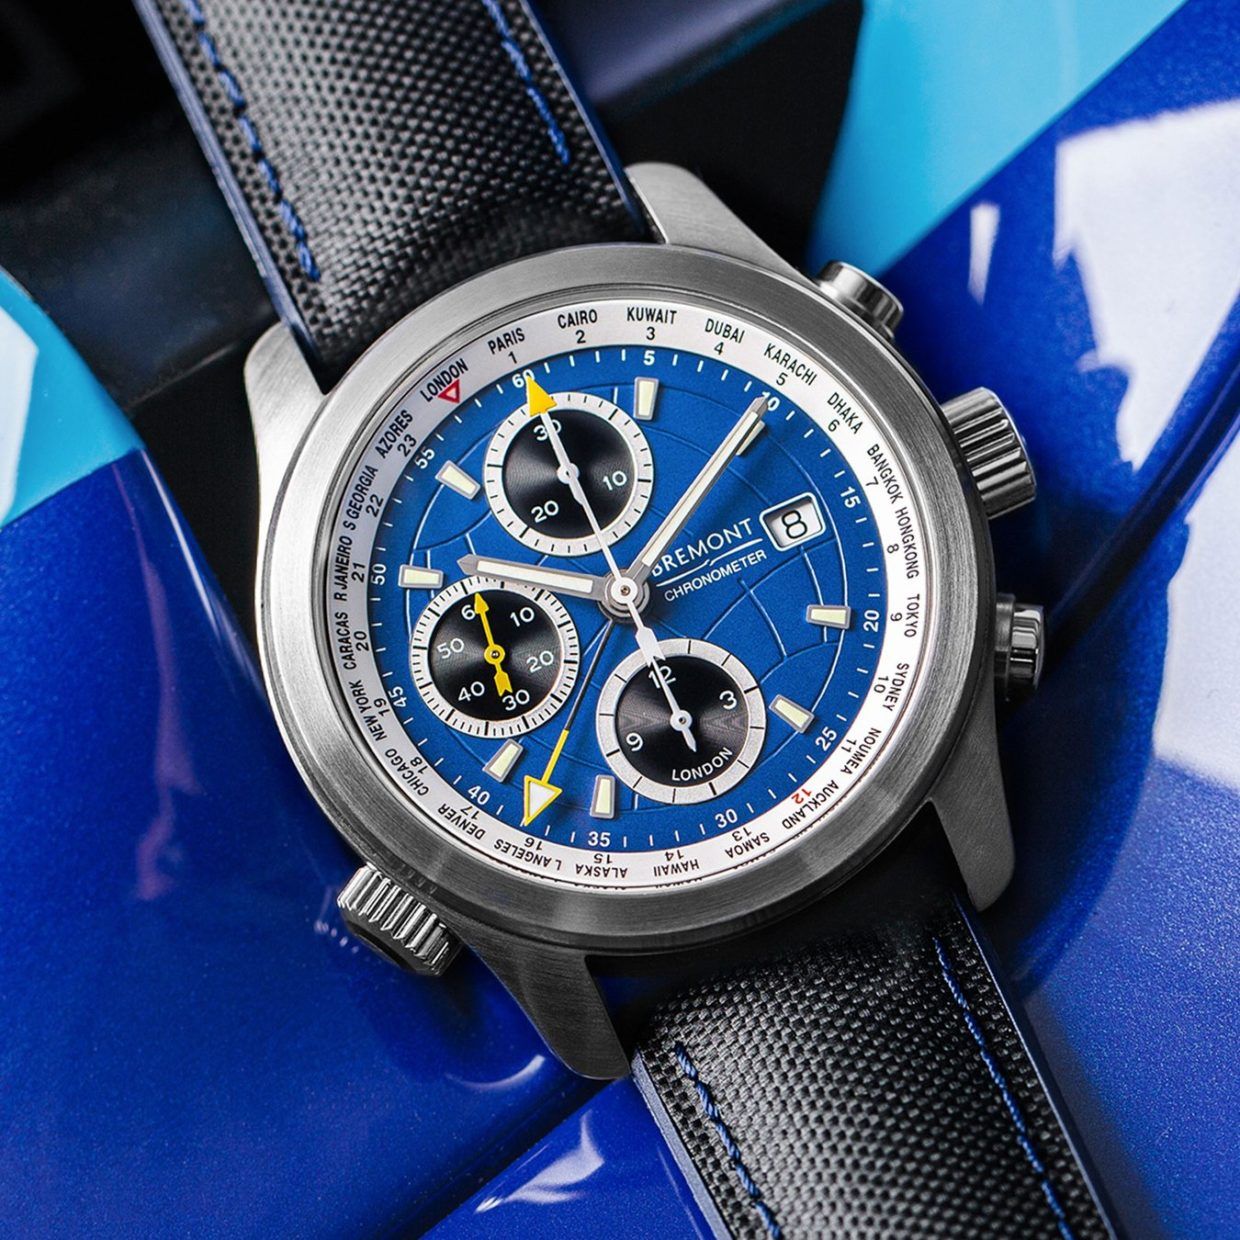 Beyond Geneva: 6 stunning non-Swiss watch brands on our radar